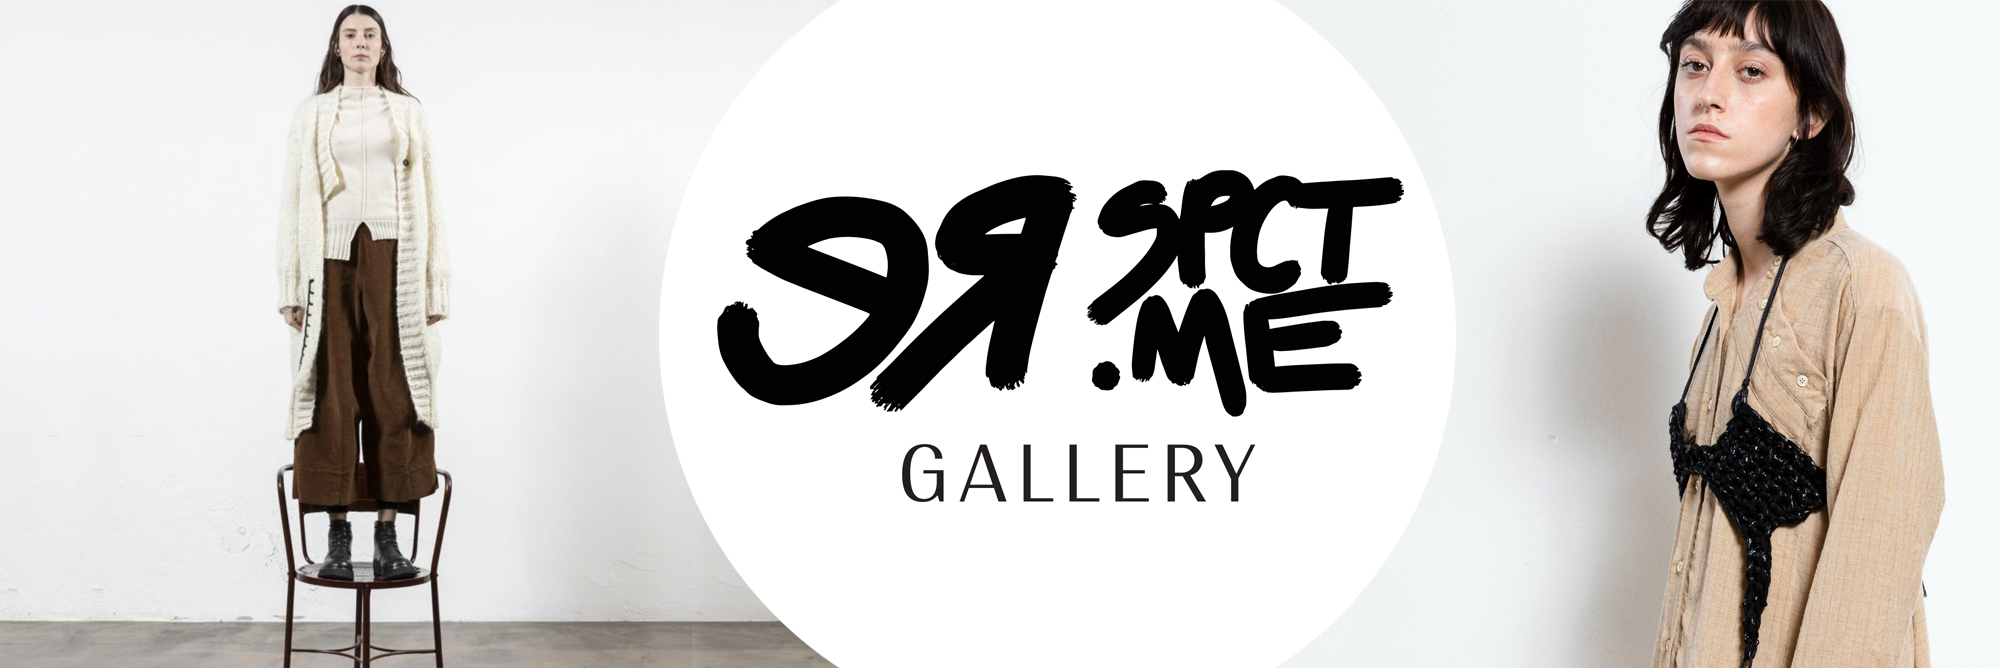 RESPCT.ME Gallery – art meets fashion